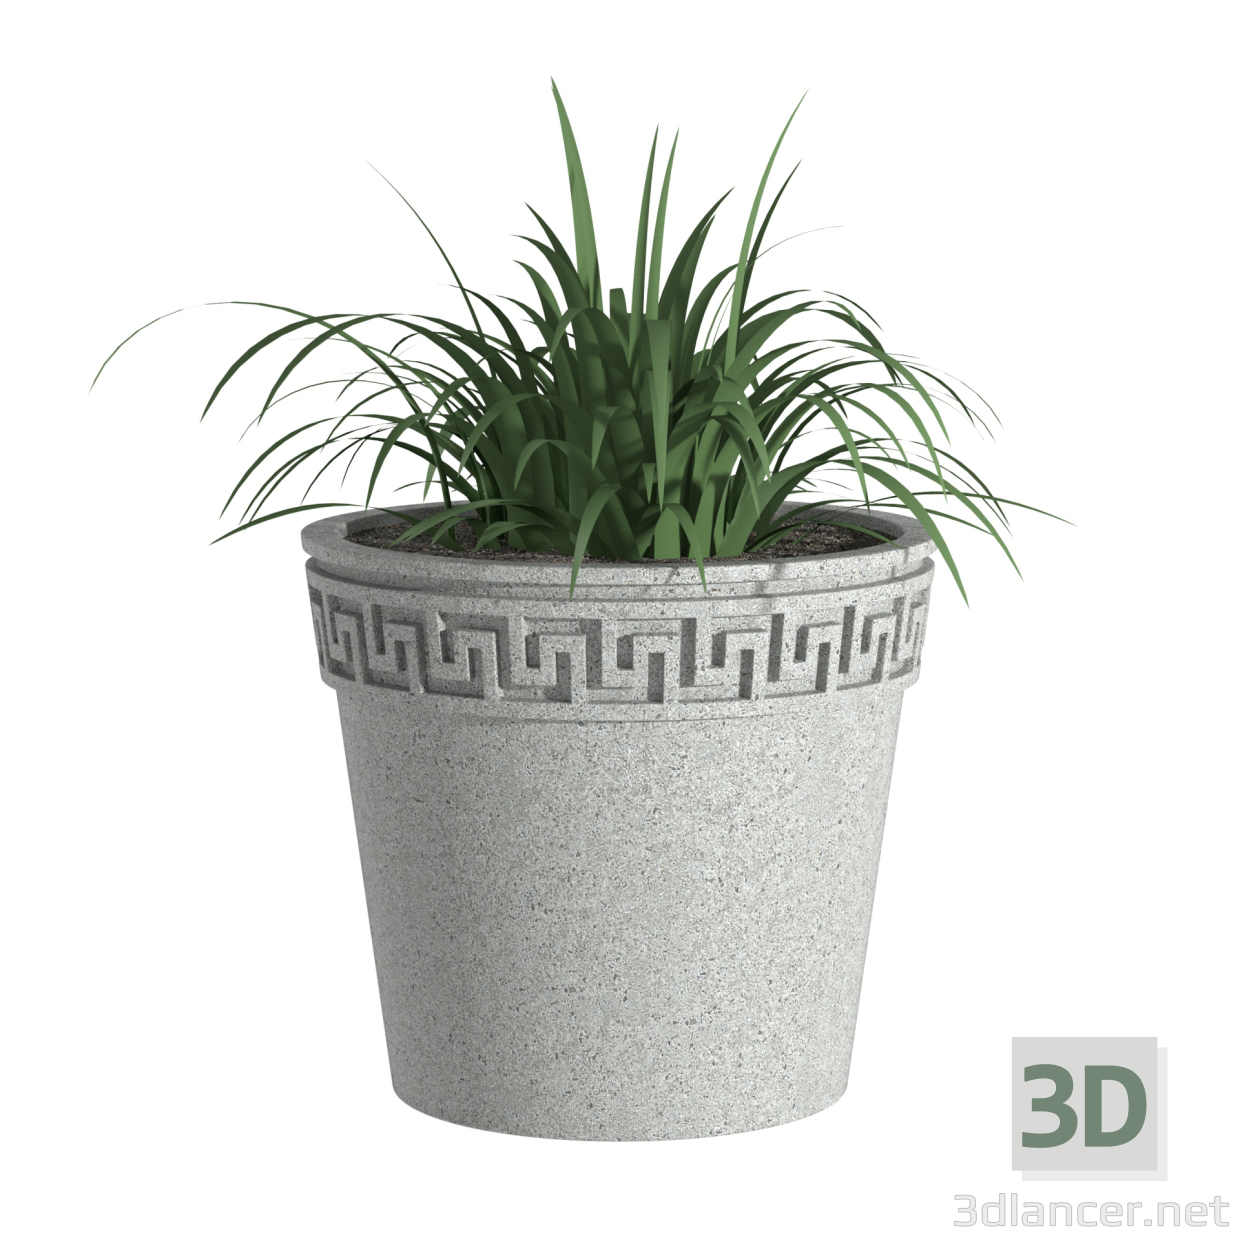 Blumentopf B10 3D-Modell kaufen - Rendern